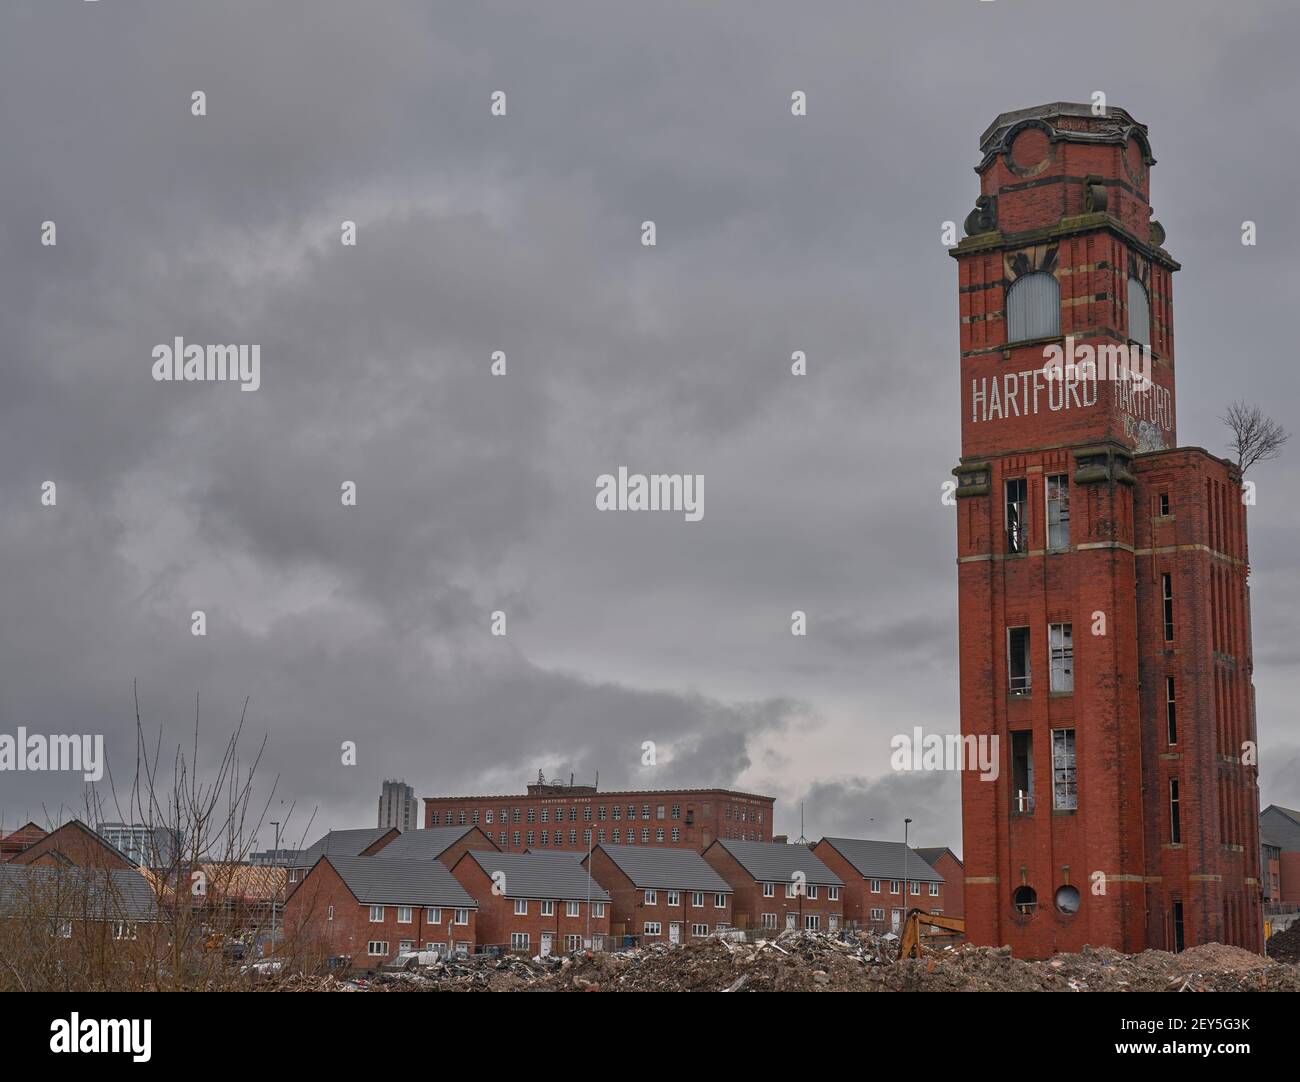 Hartford Mill in Chadderton, Oldham being demolished Stock Photo